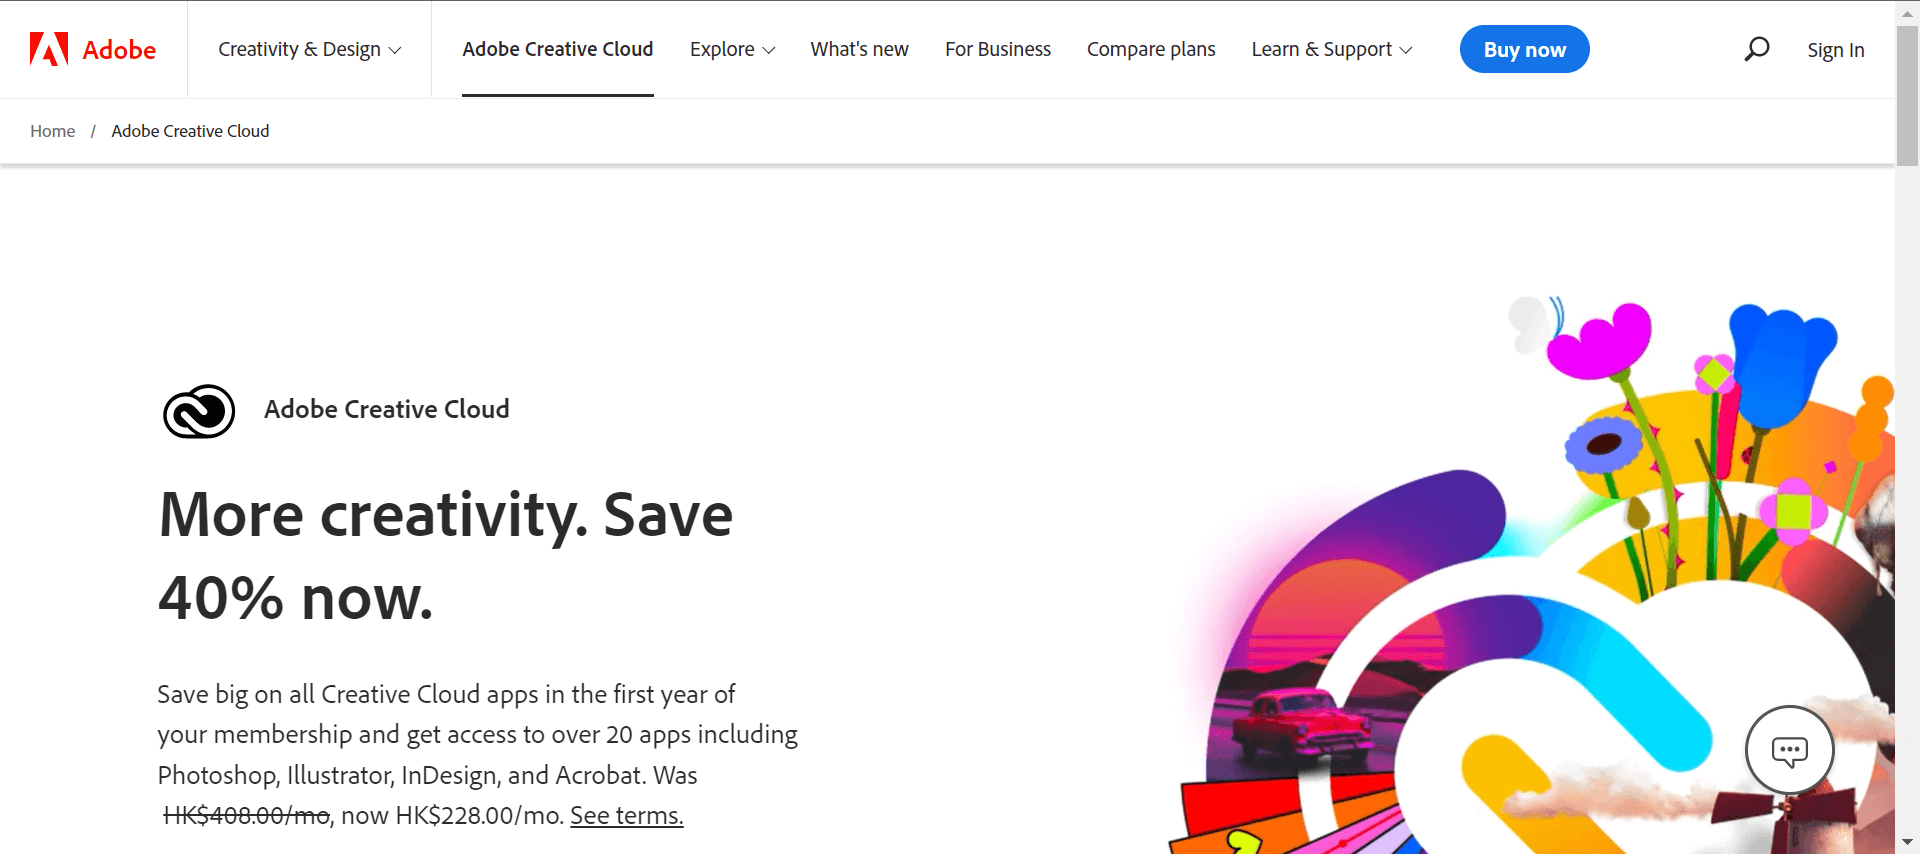 Adobe Creative Cloud Express's website